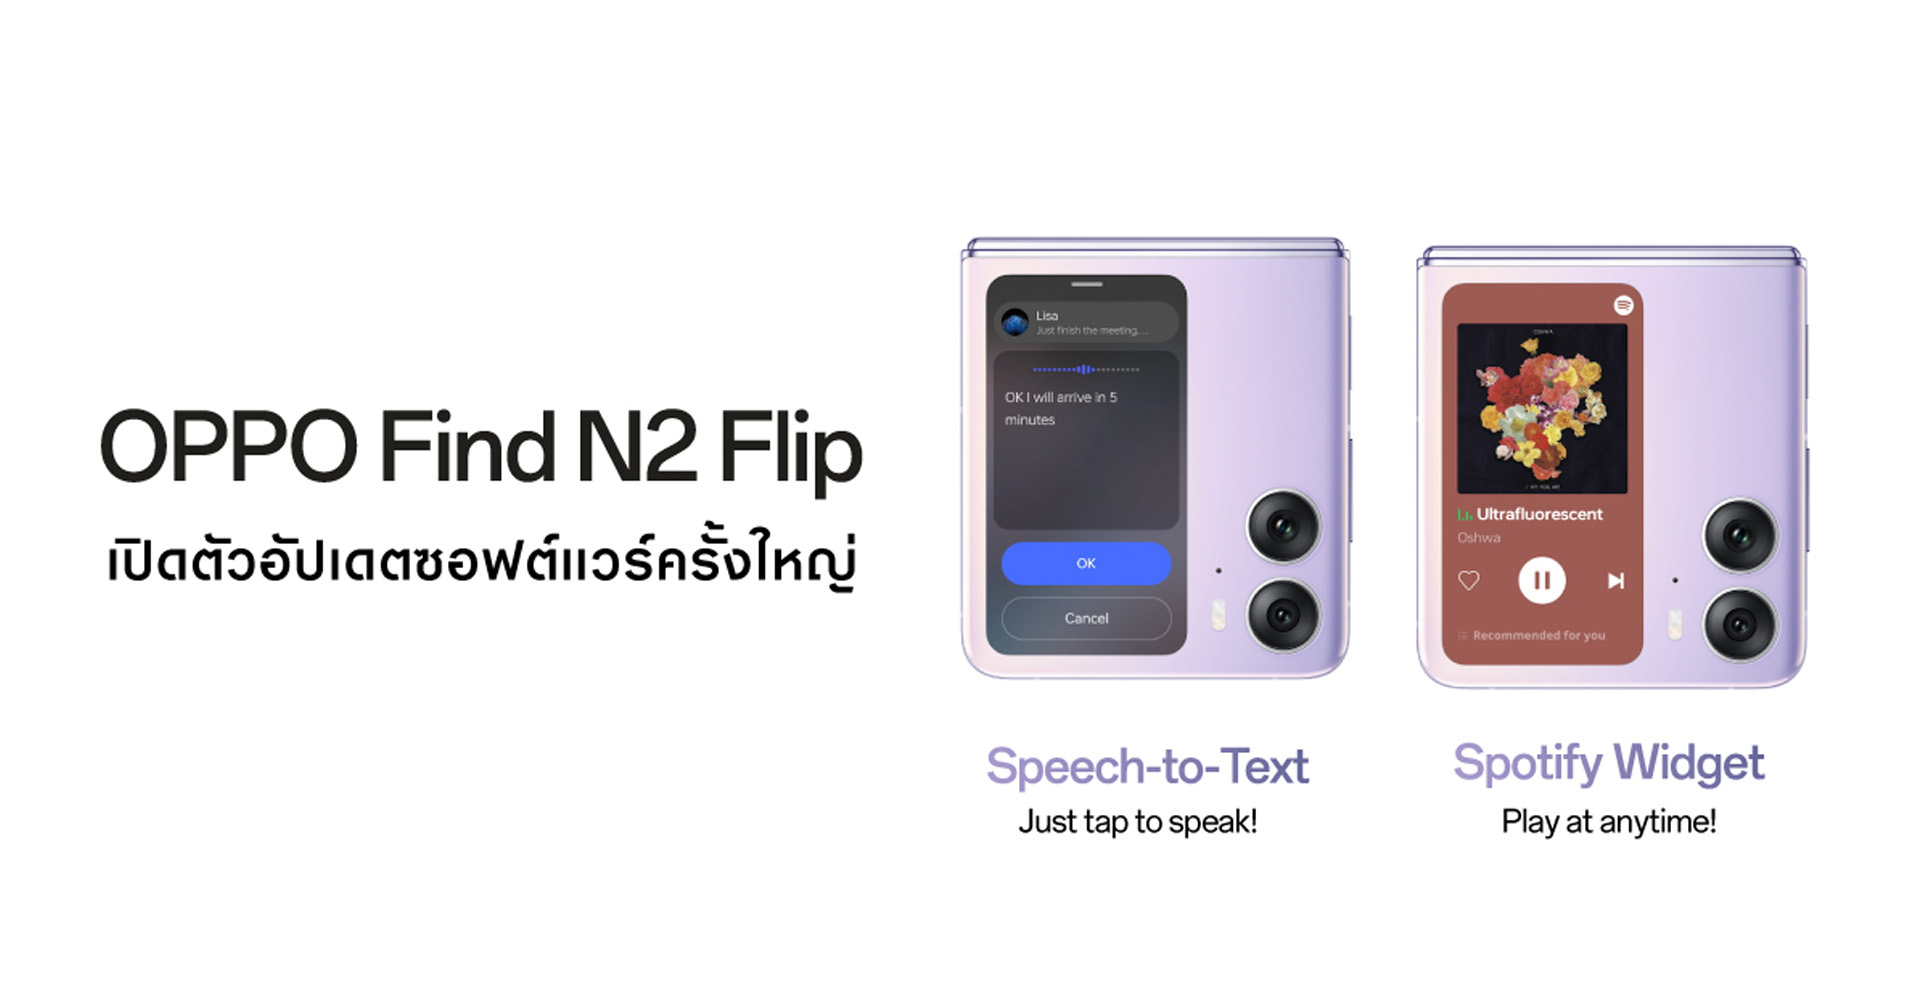 OPPO Find N2 Flip เปิดตัวอัปเดตซอฟต์แวร์ครั้งใหญ่ เพิ่มวิดเจ็ต Spotify ใหม่ และ Speech-to-Text Quick Reply